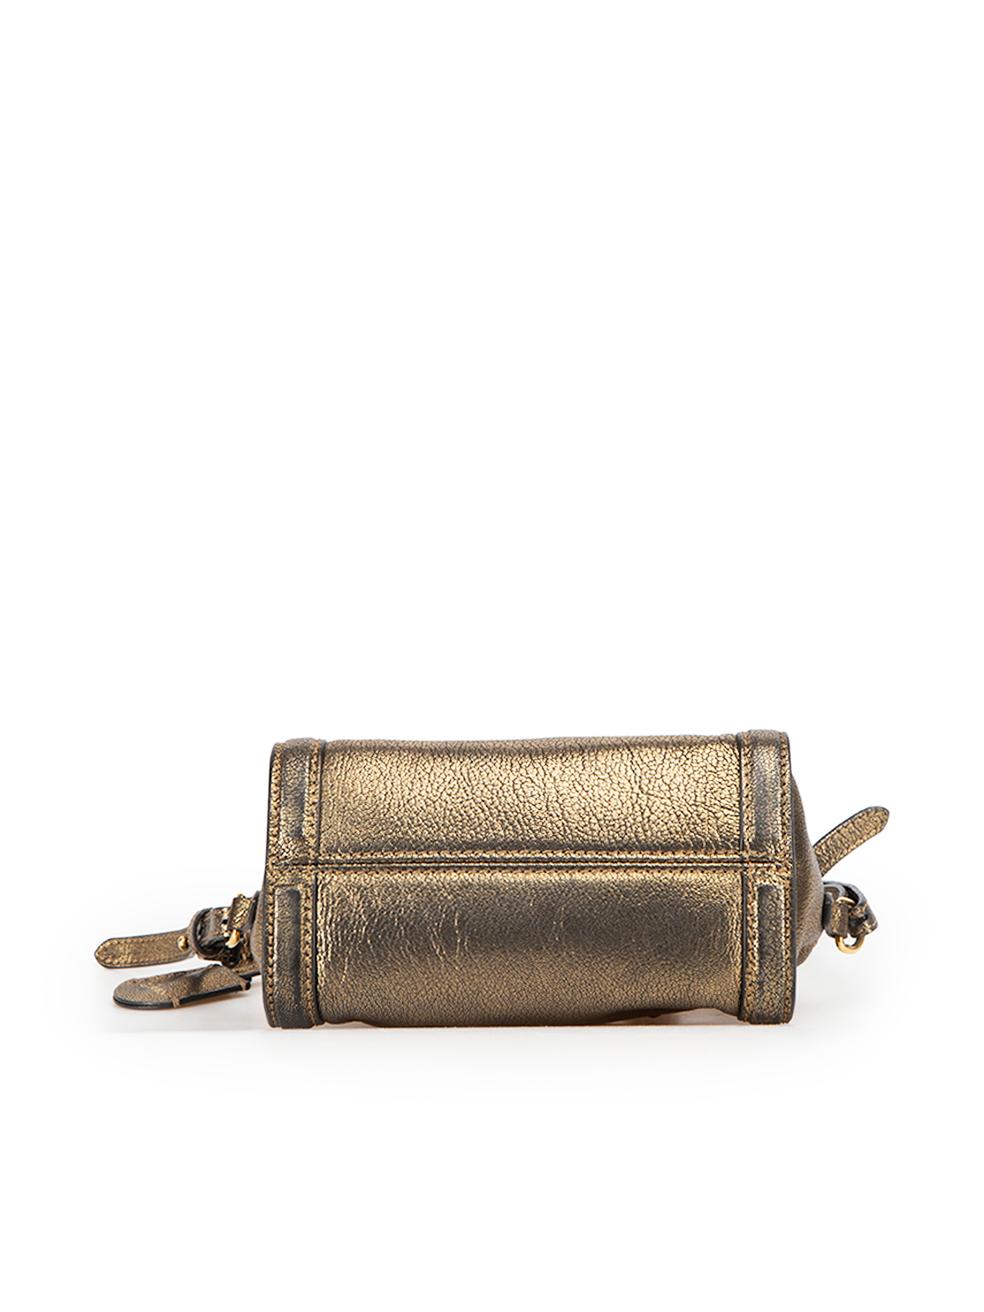 Alexander McQueen Women's Gold Leather Metallic Mini Bag 1